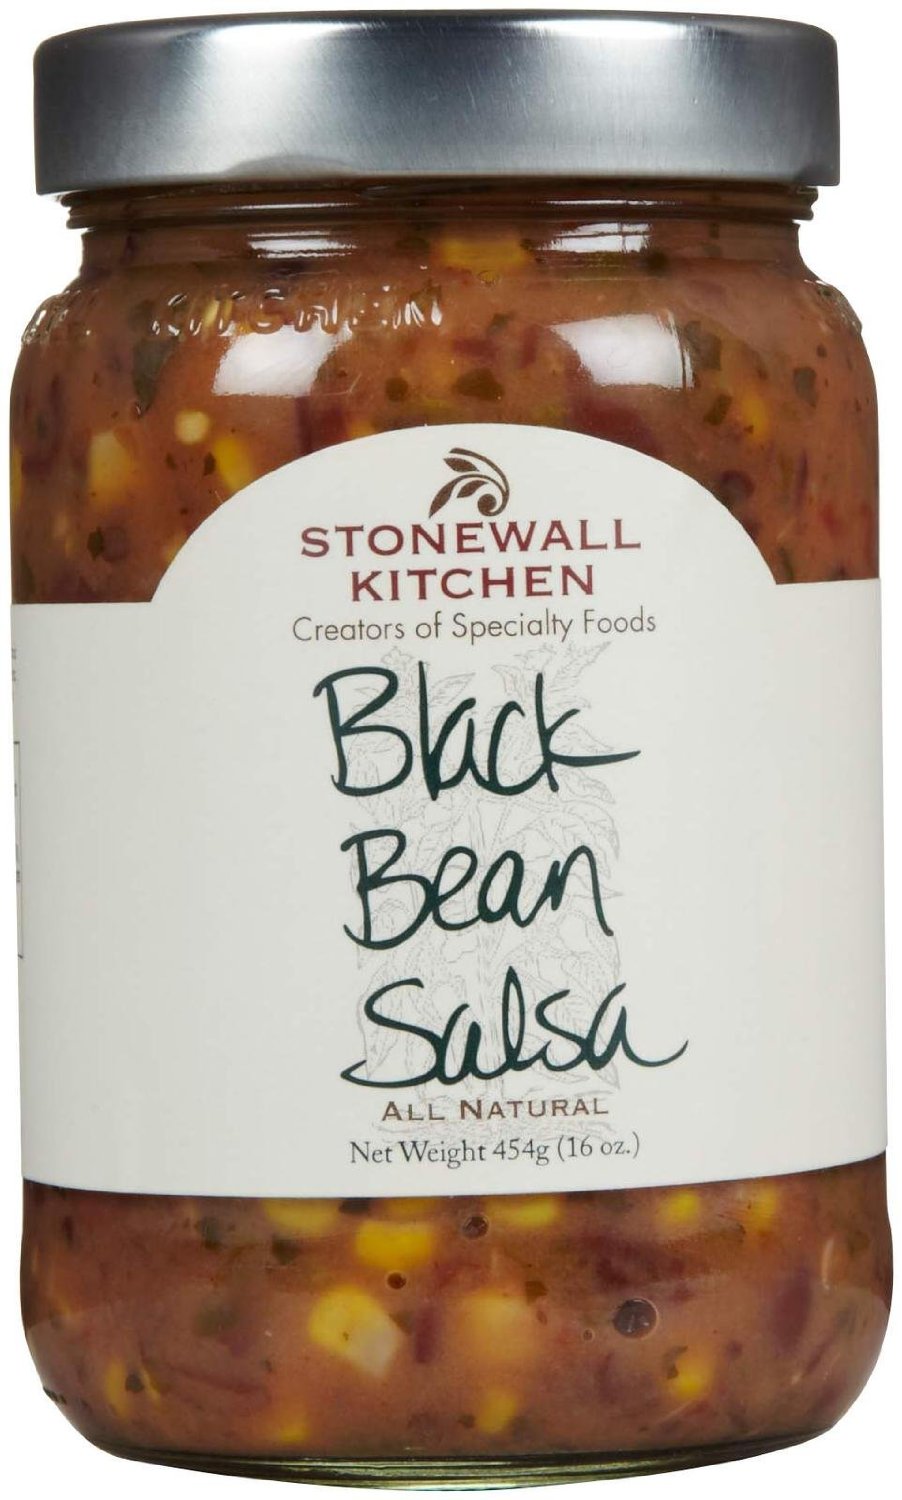 Stonewall Kitchen Black Bean Salsa, 16 oz.